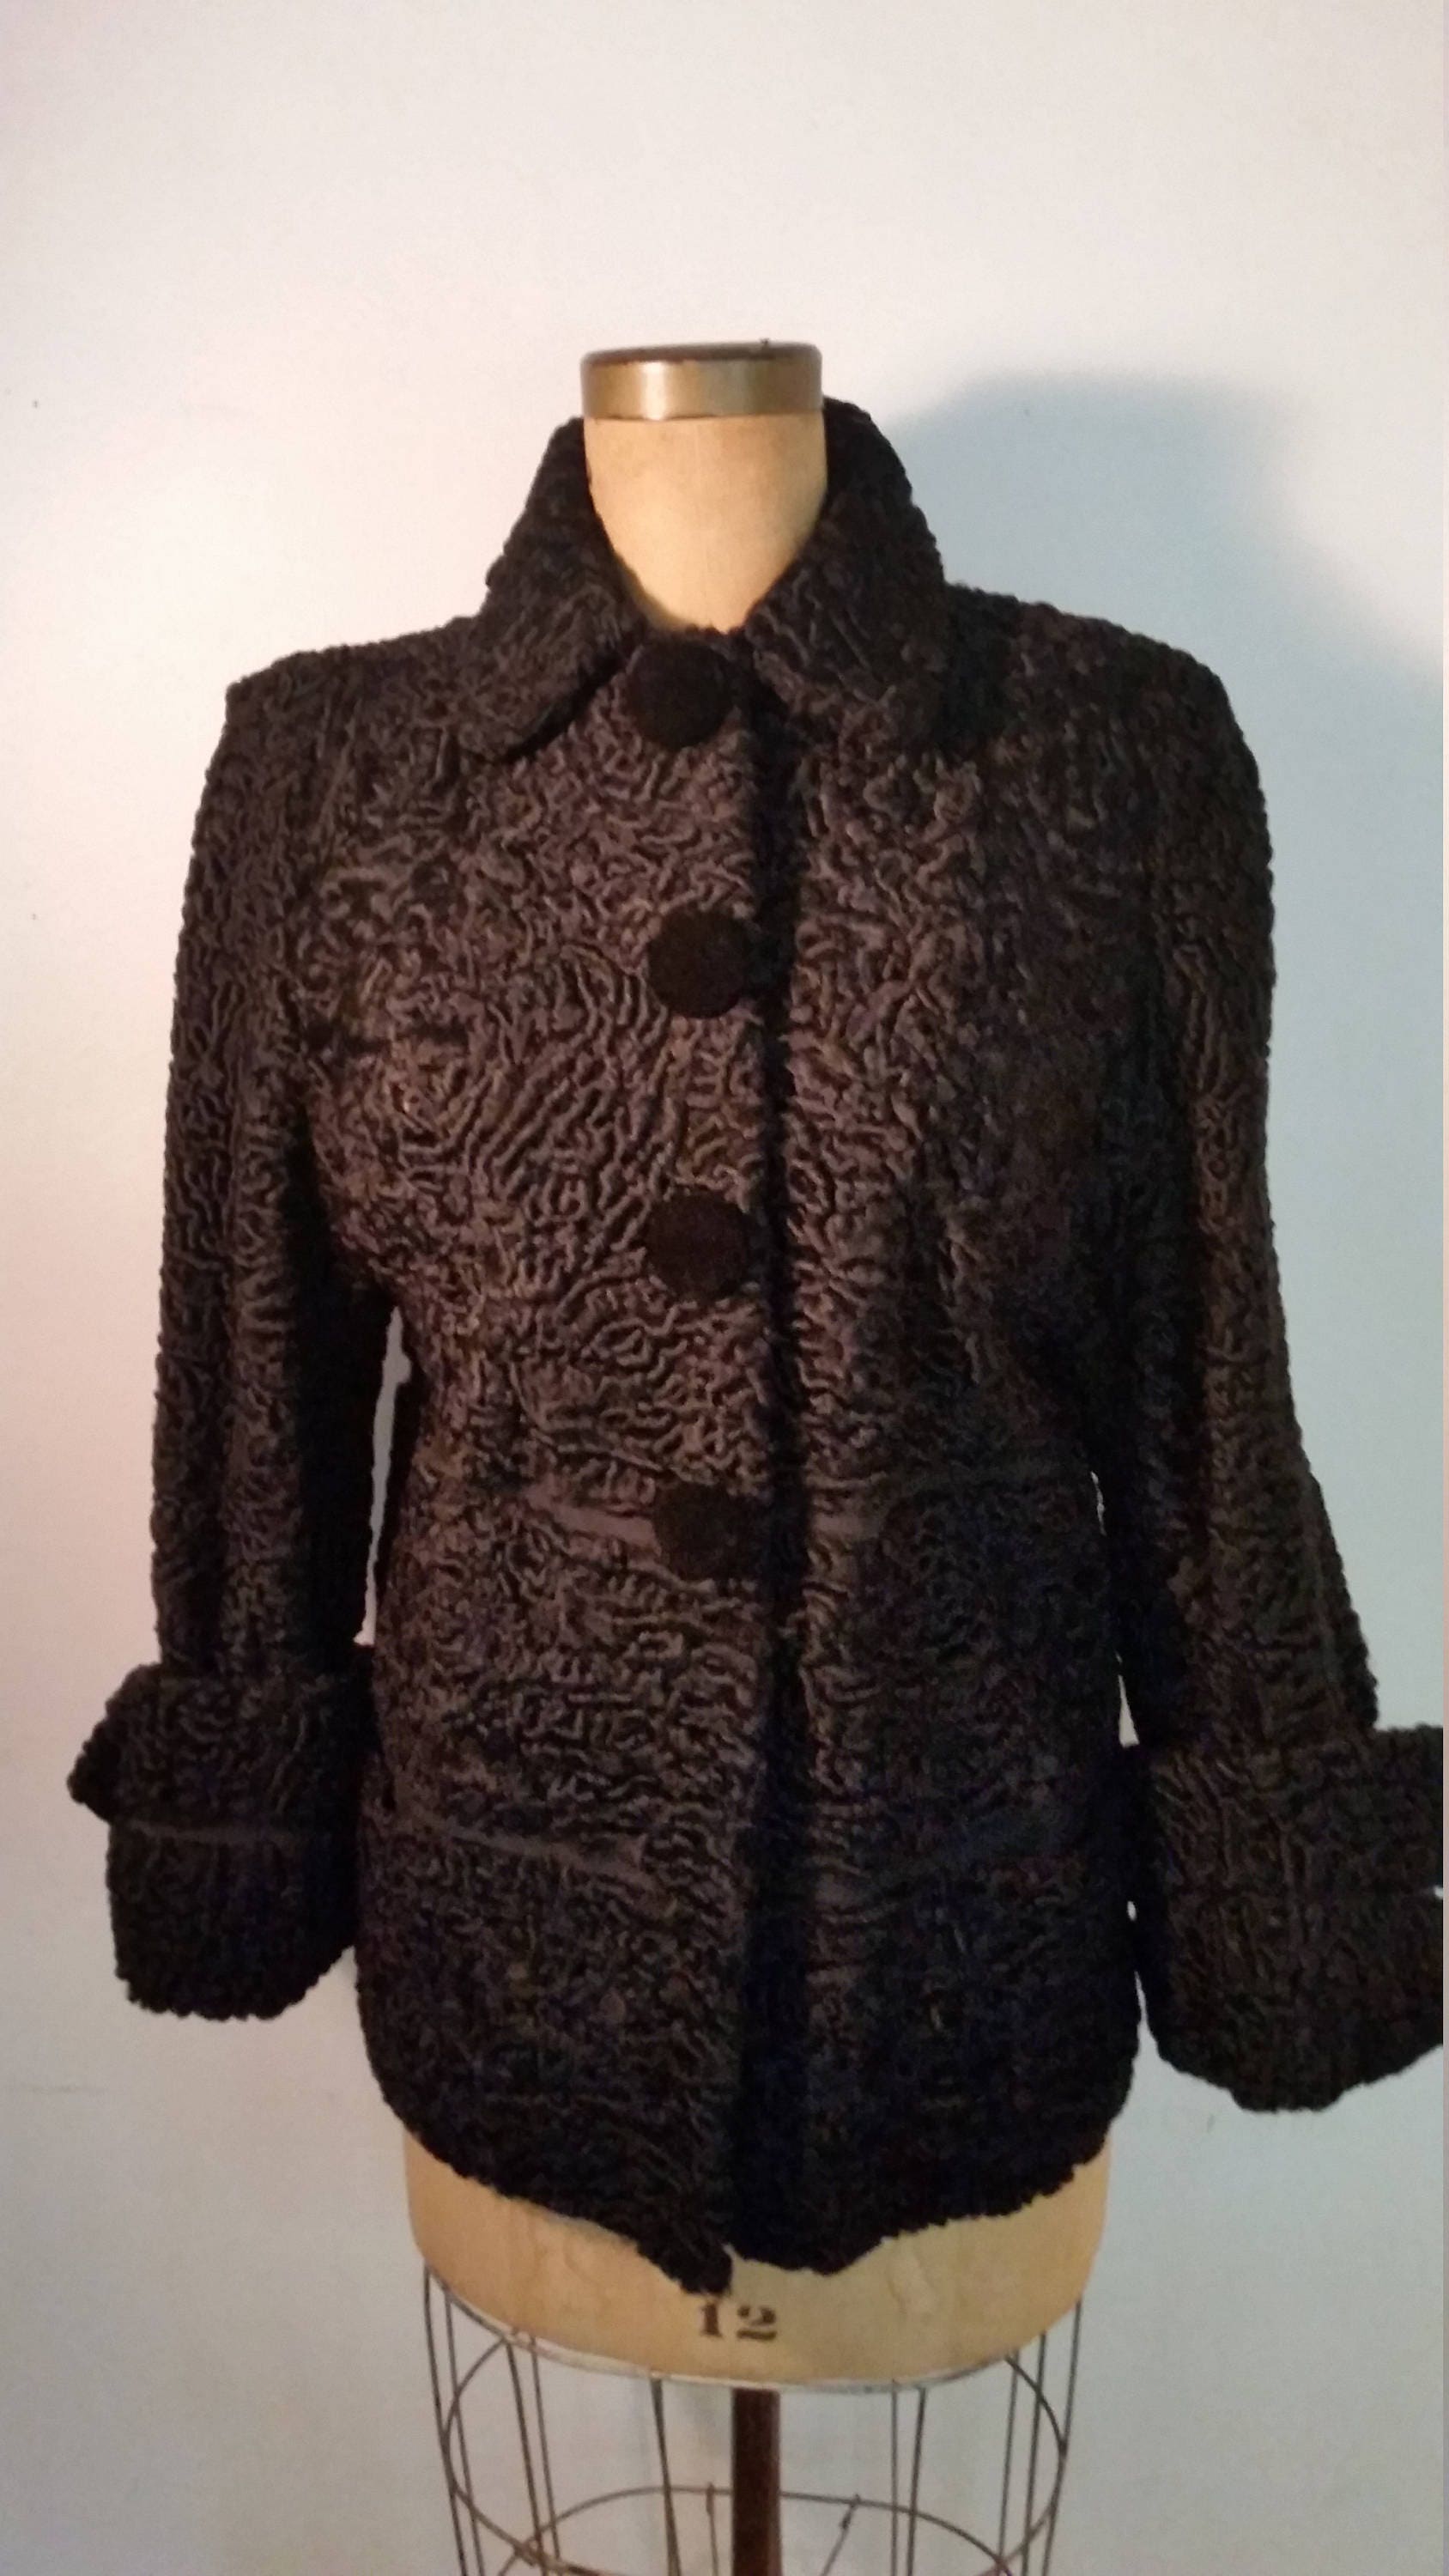 Vintage Persian Lamb Jacket 1950's Fur Coat With Large